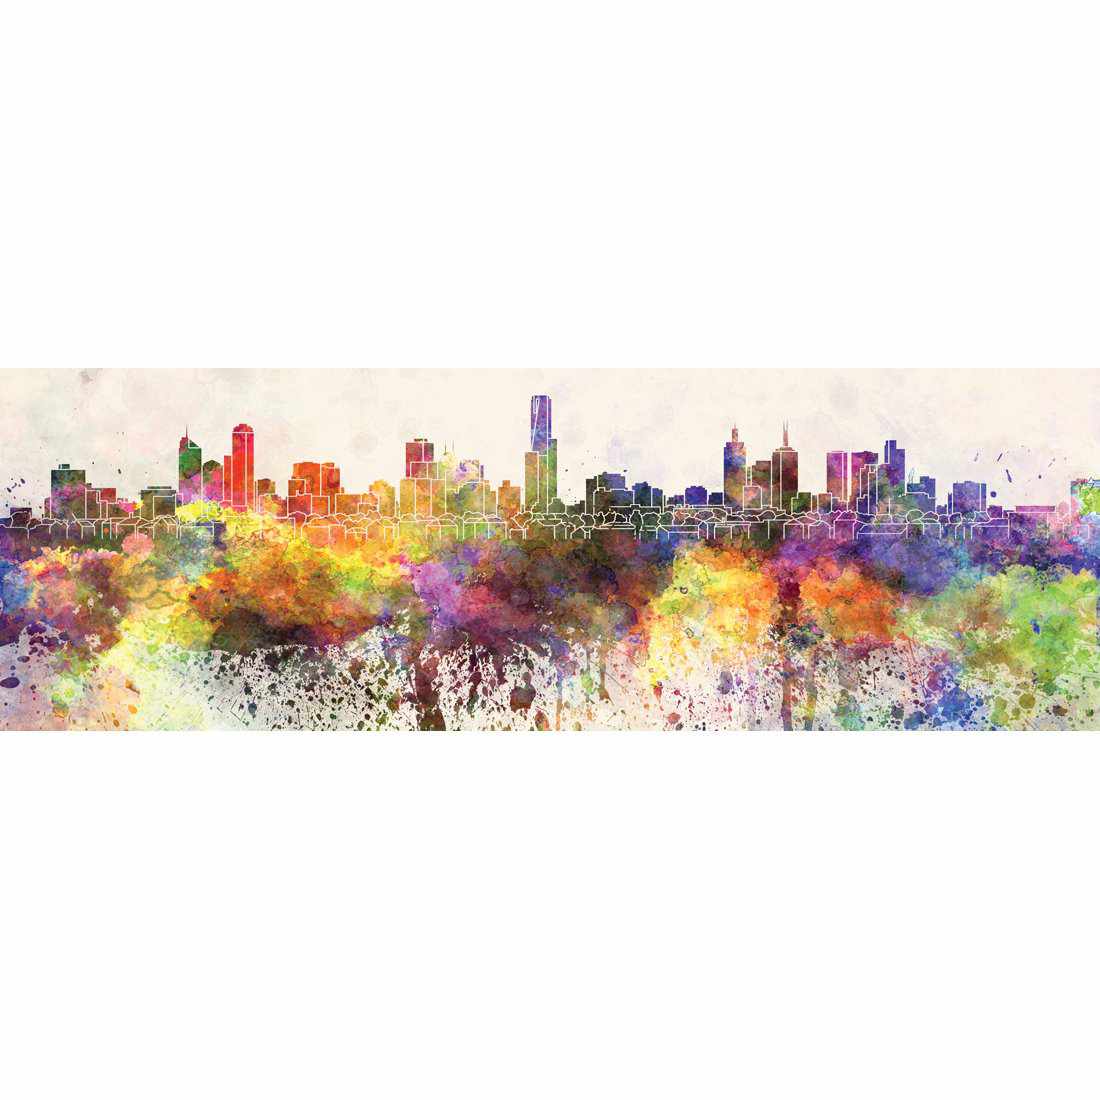 Melbourne Skyline Watercolour, Long-Acrylic-Wall Art Design-With Border-Acrylic - No Frame-60x20cm-Wall Art Designs